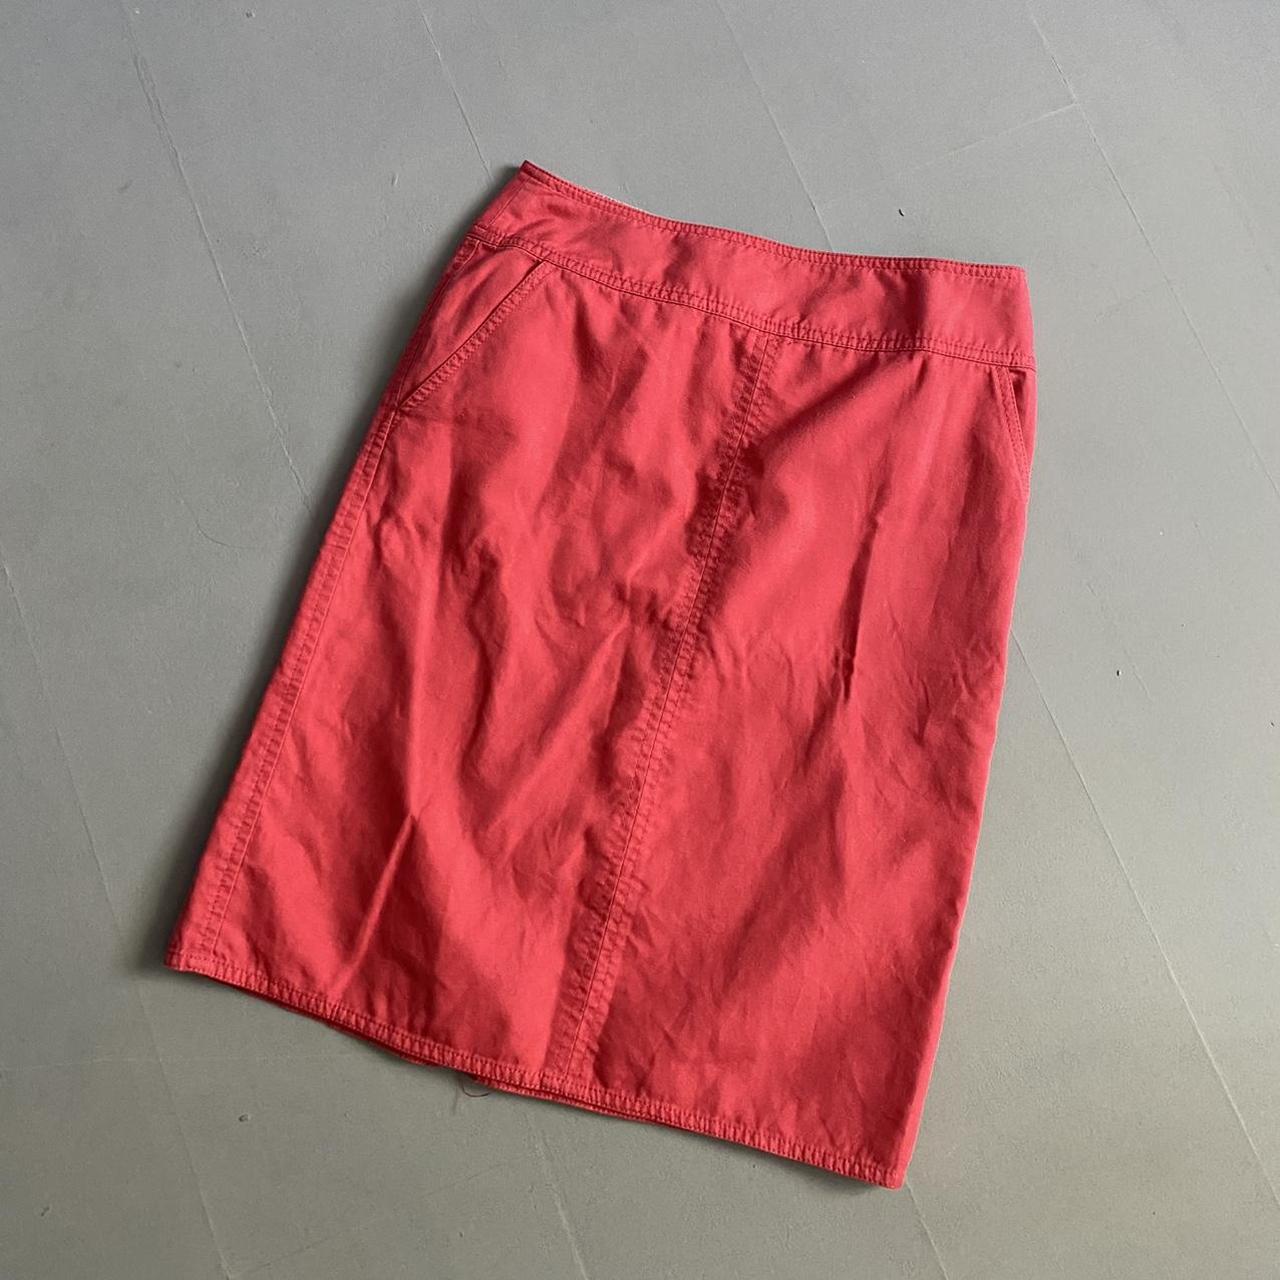 Sonia Rykiel  Women's Pink and Red Skirt